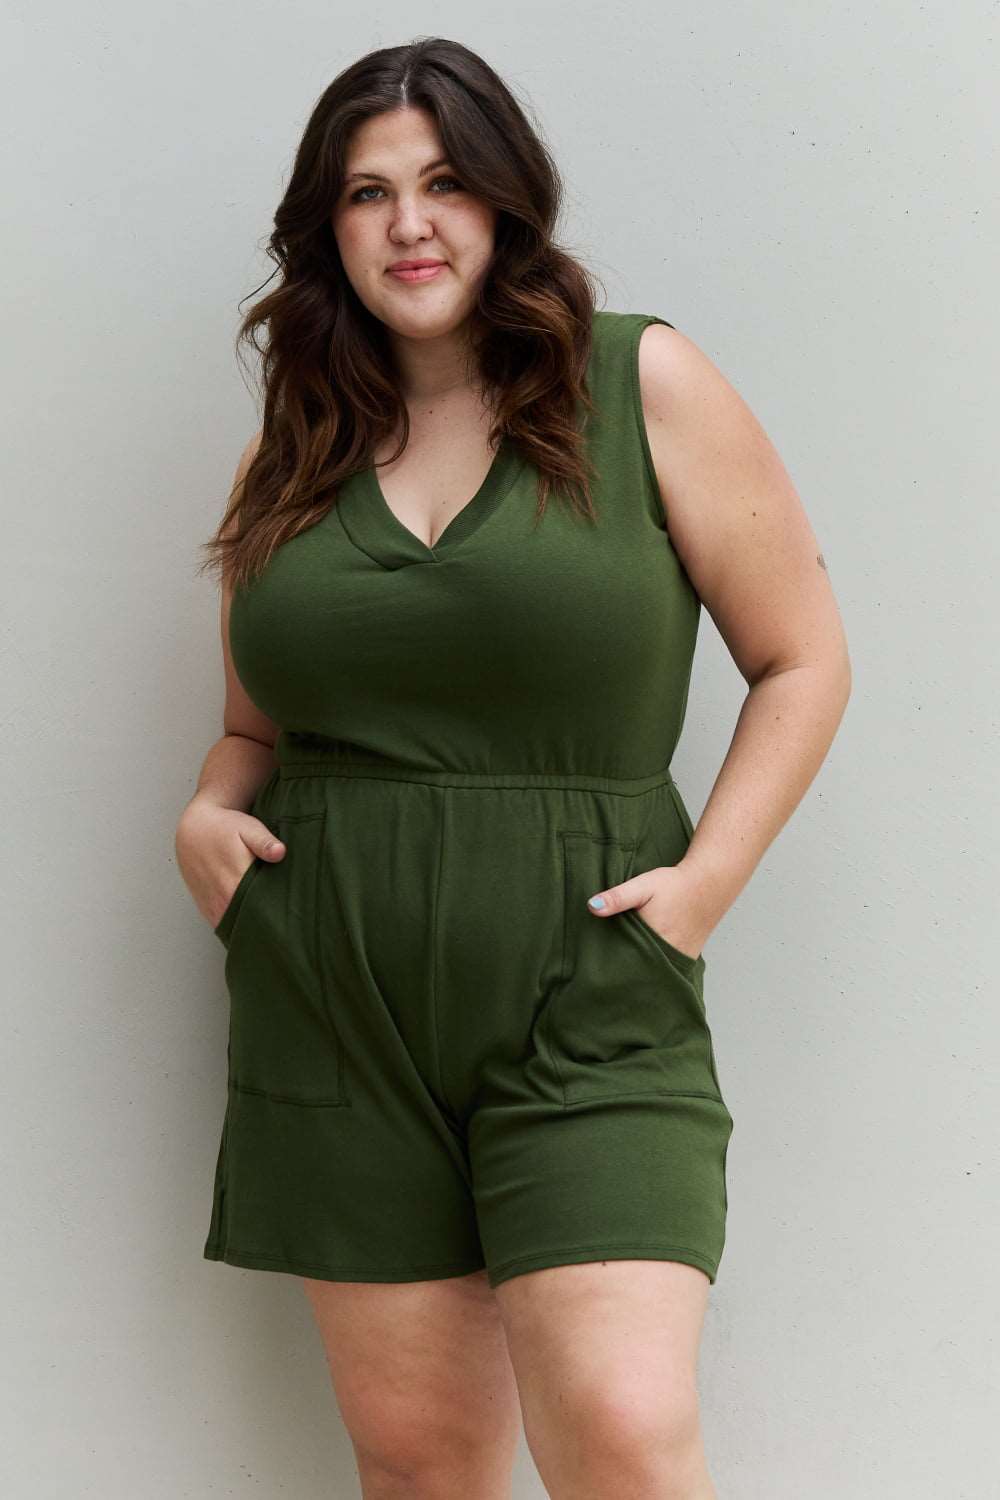 Zenana - Women's Plus Size Forever Yours V-Neck Sleeveless Romper in Army Green